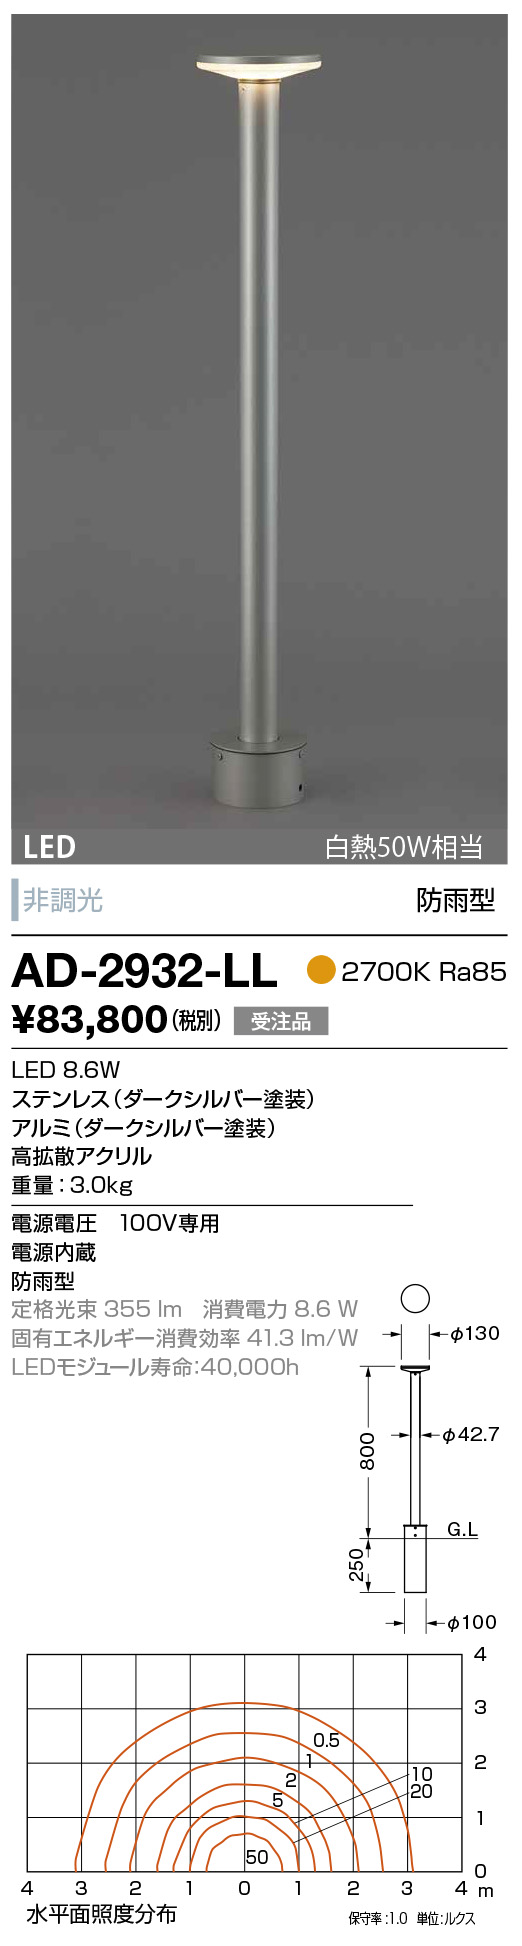 AD-2932-LL(山田照明) 商品詳細 ～ 照明器具・換気扇他、電設資材販売のブライト